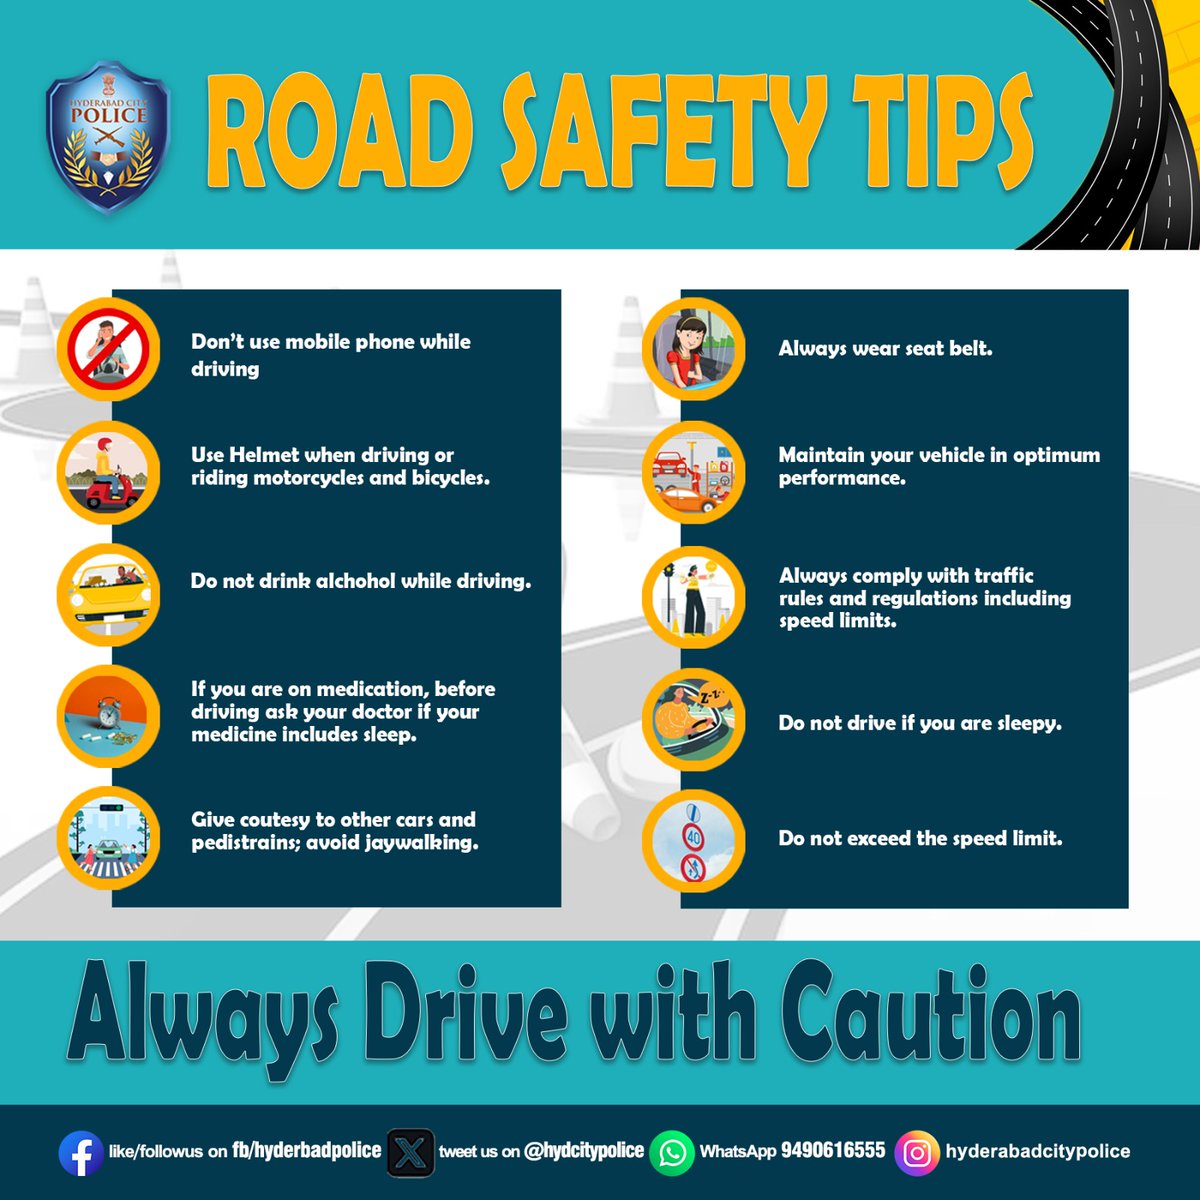 Follow #TrafficRules, #BeSafe 
#RoadSafetyTips